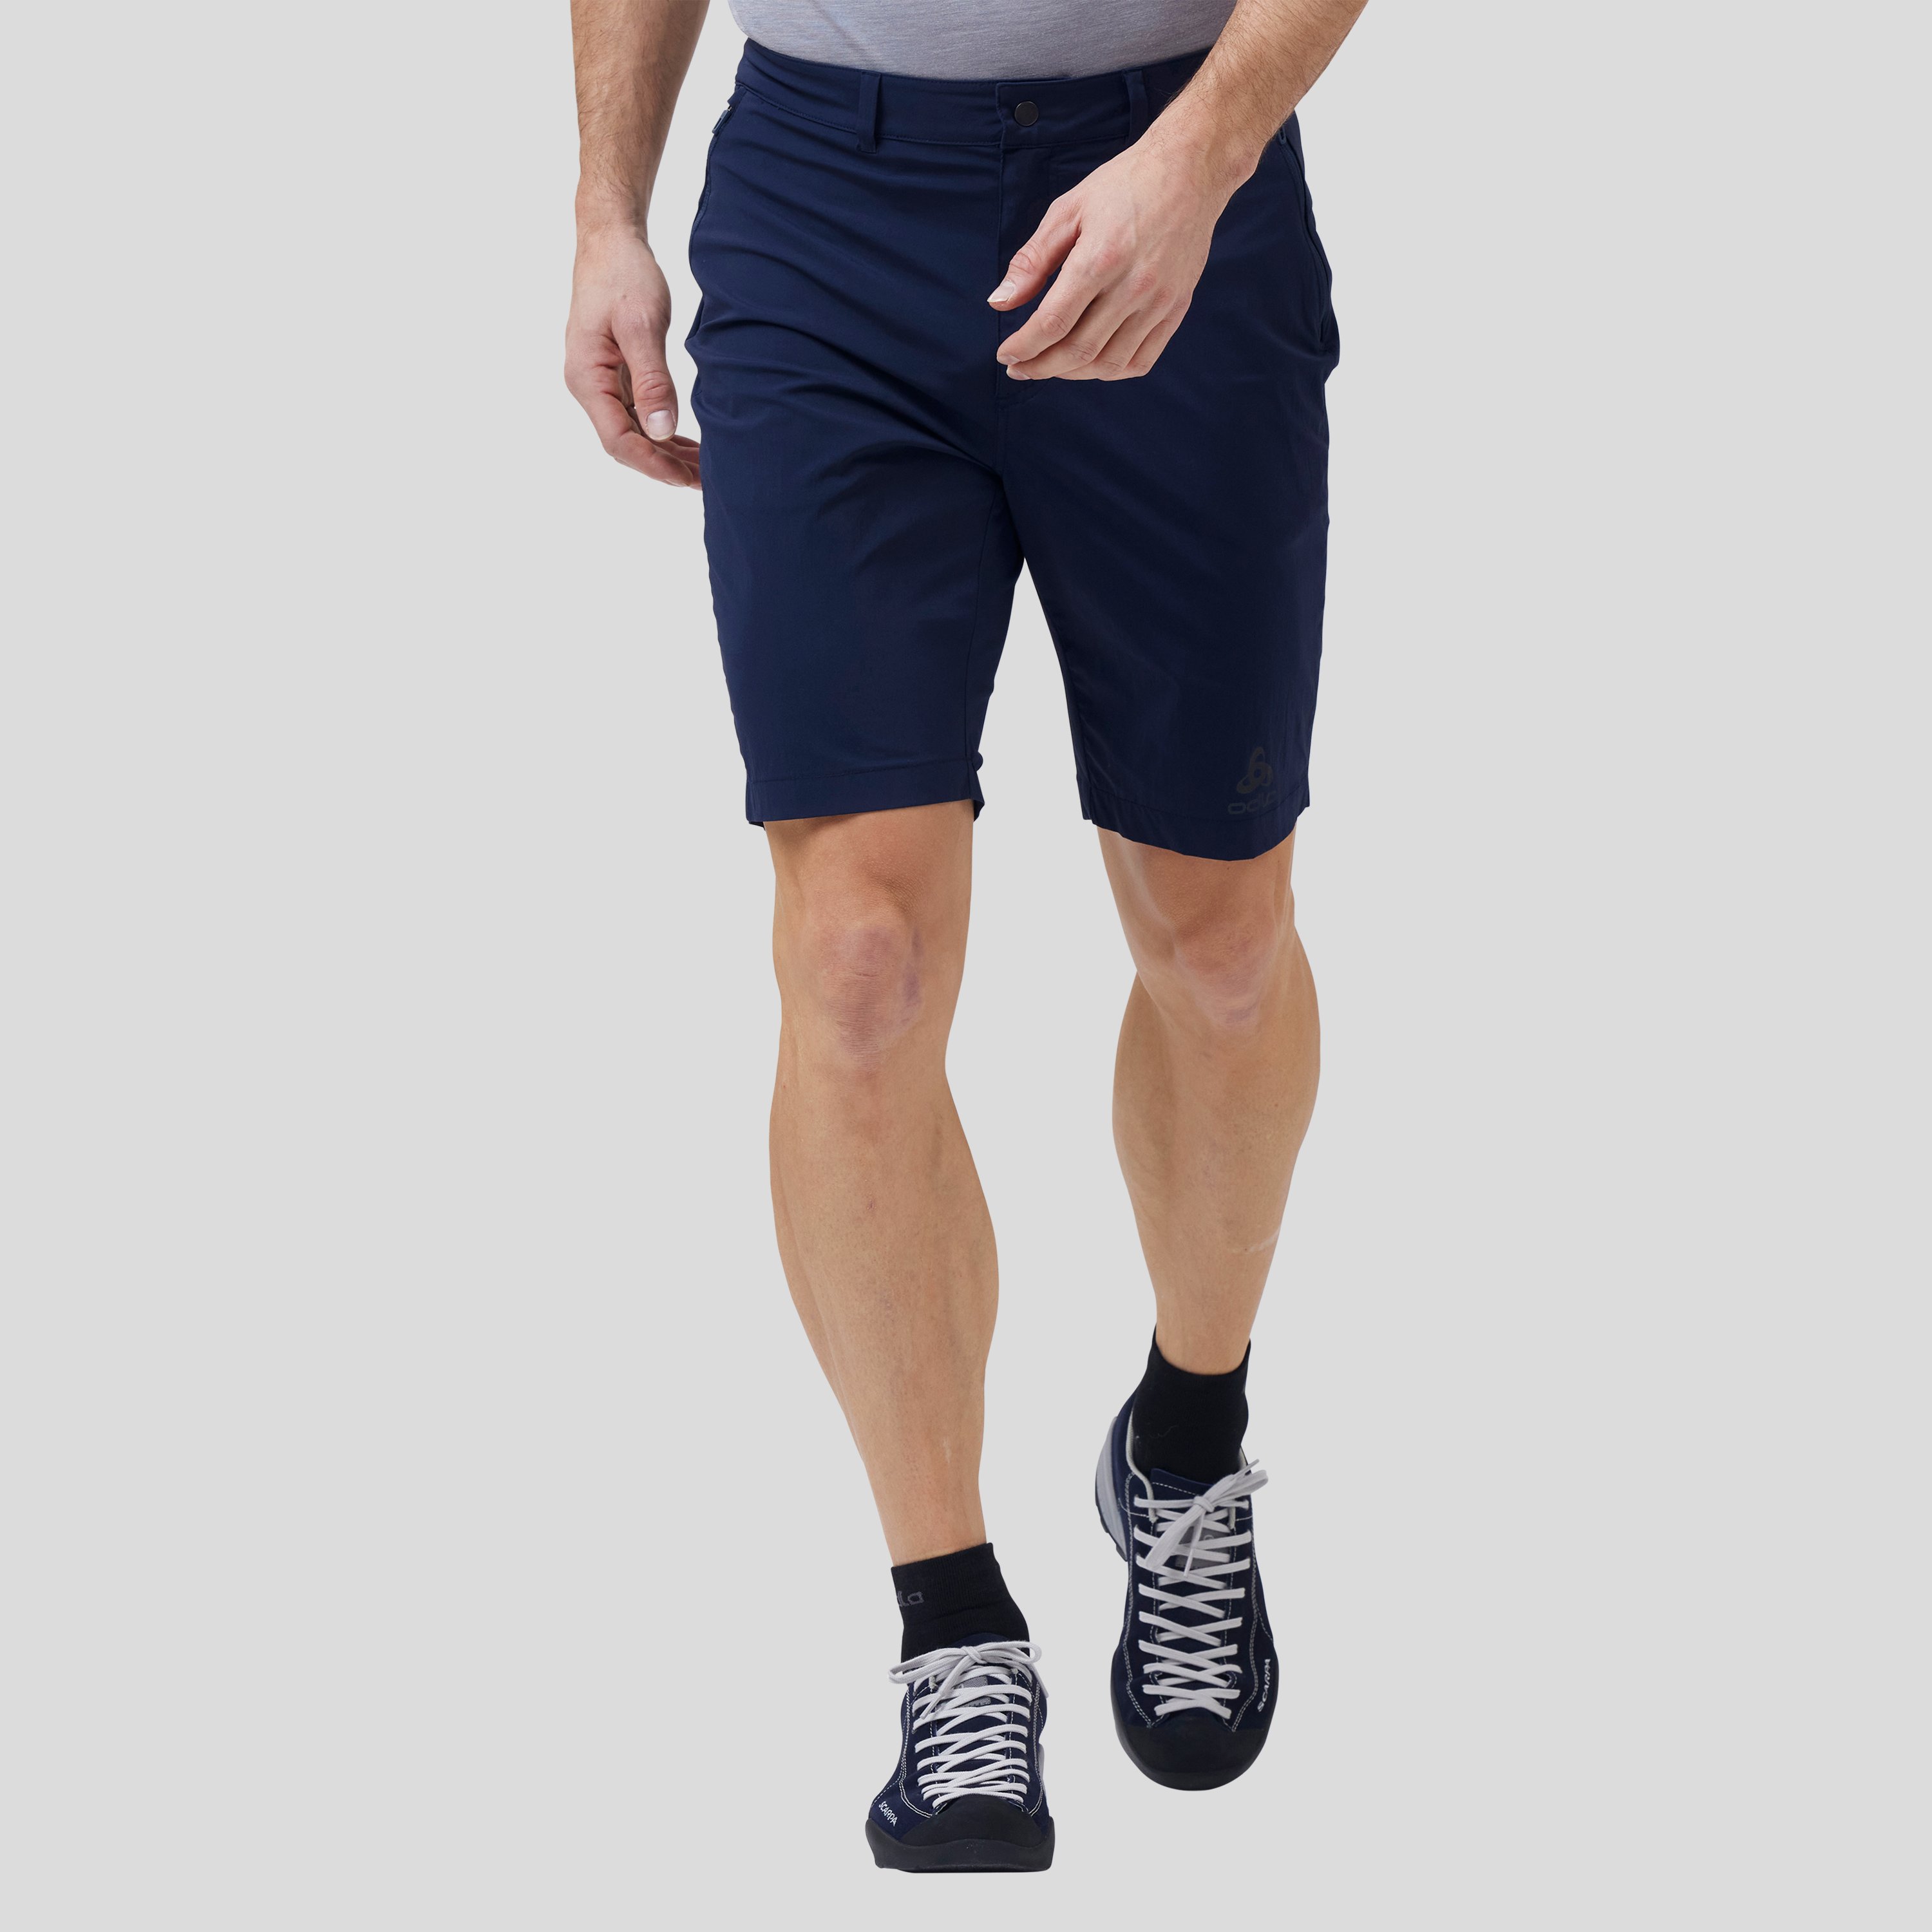 ODLO Conversion Shorts für Herren, 54, marineblau